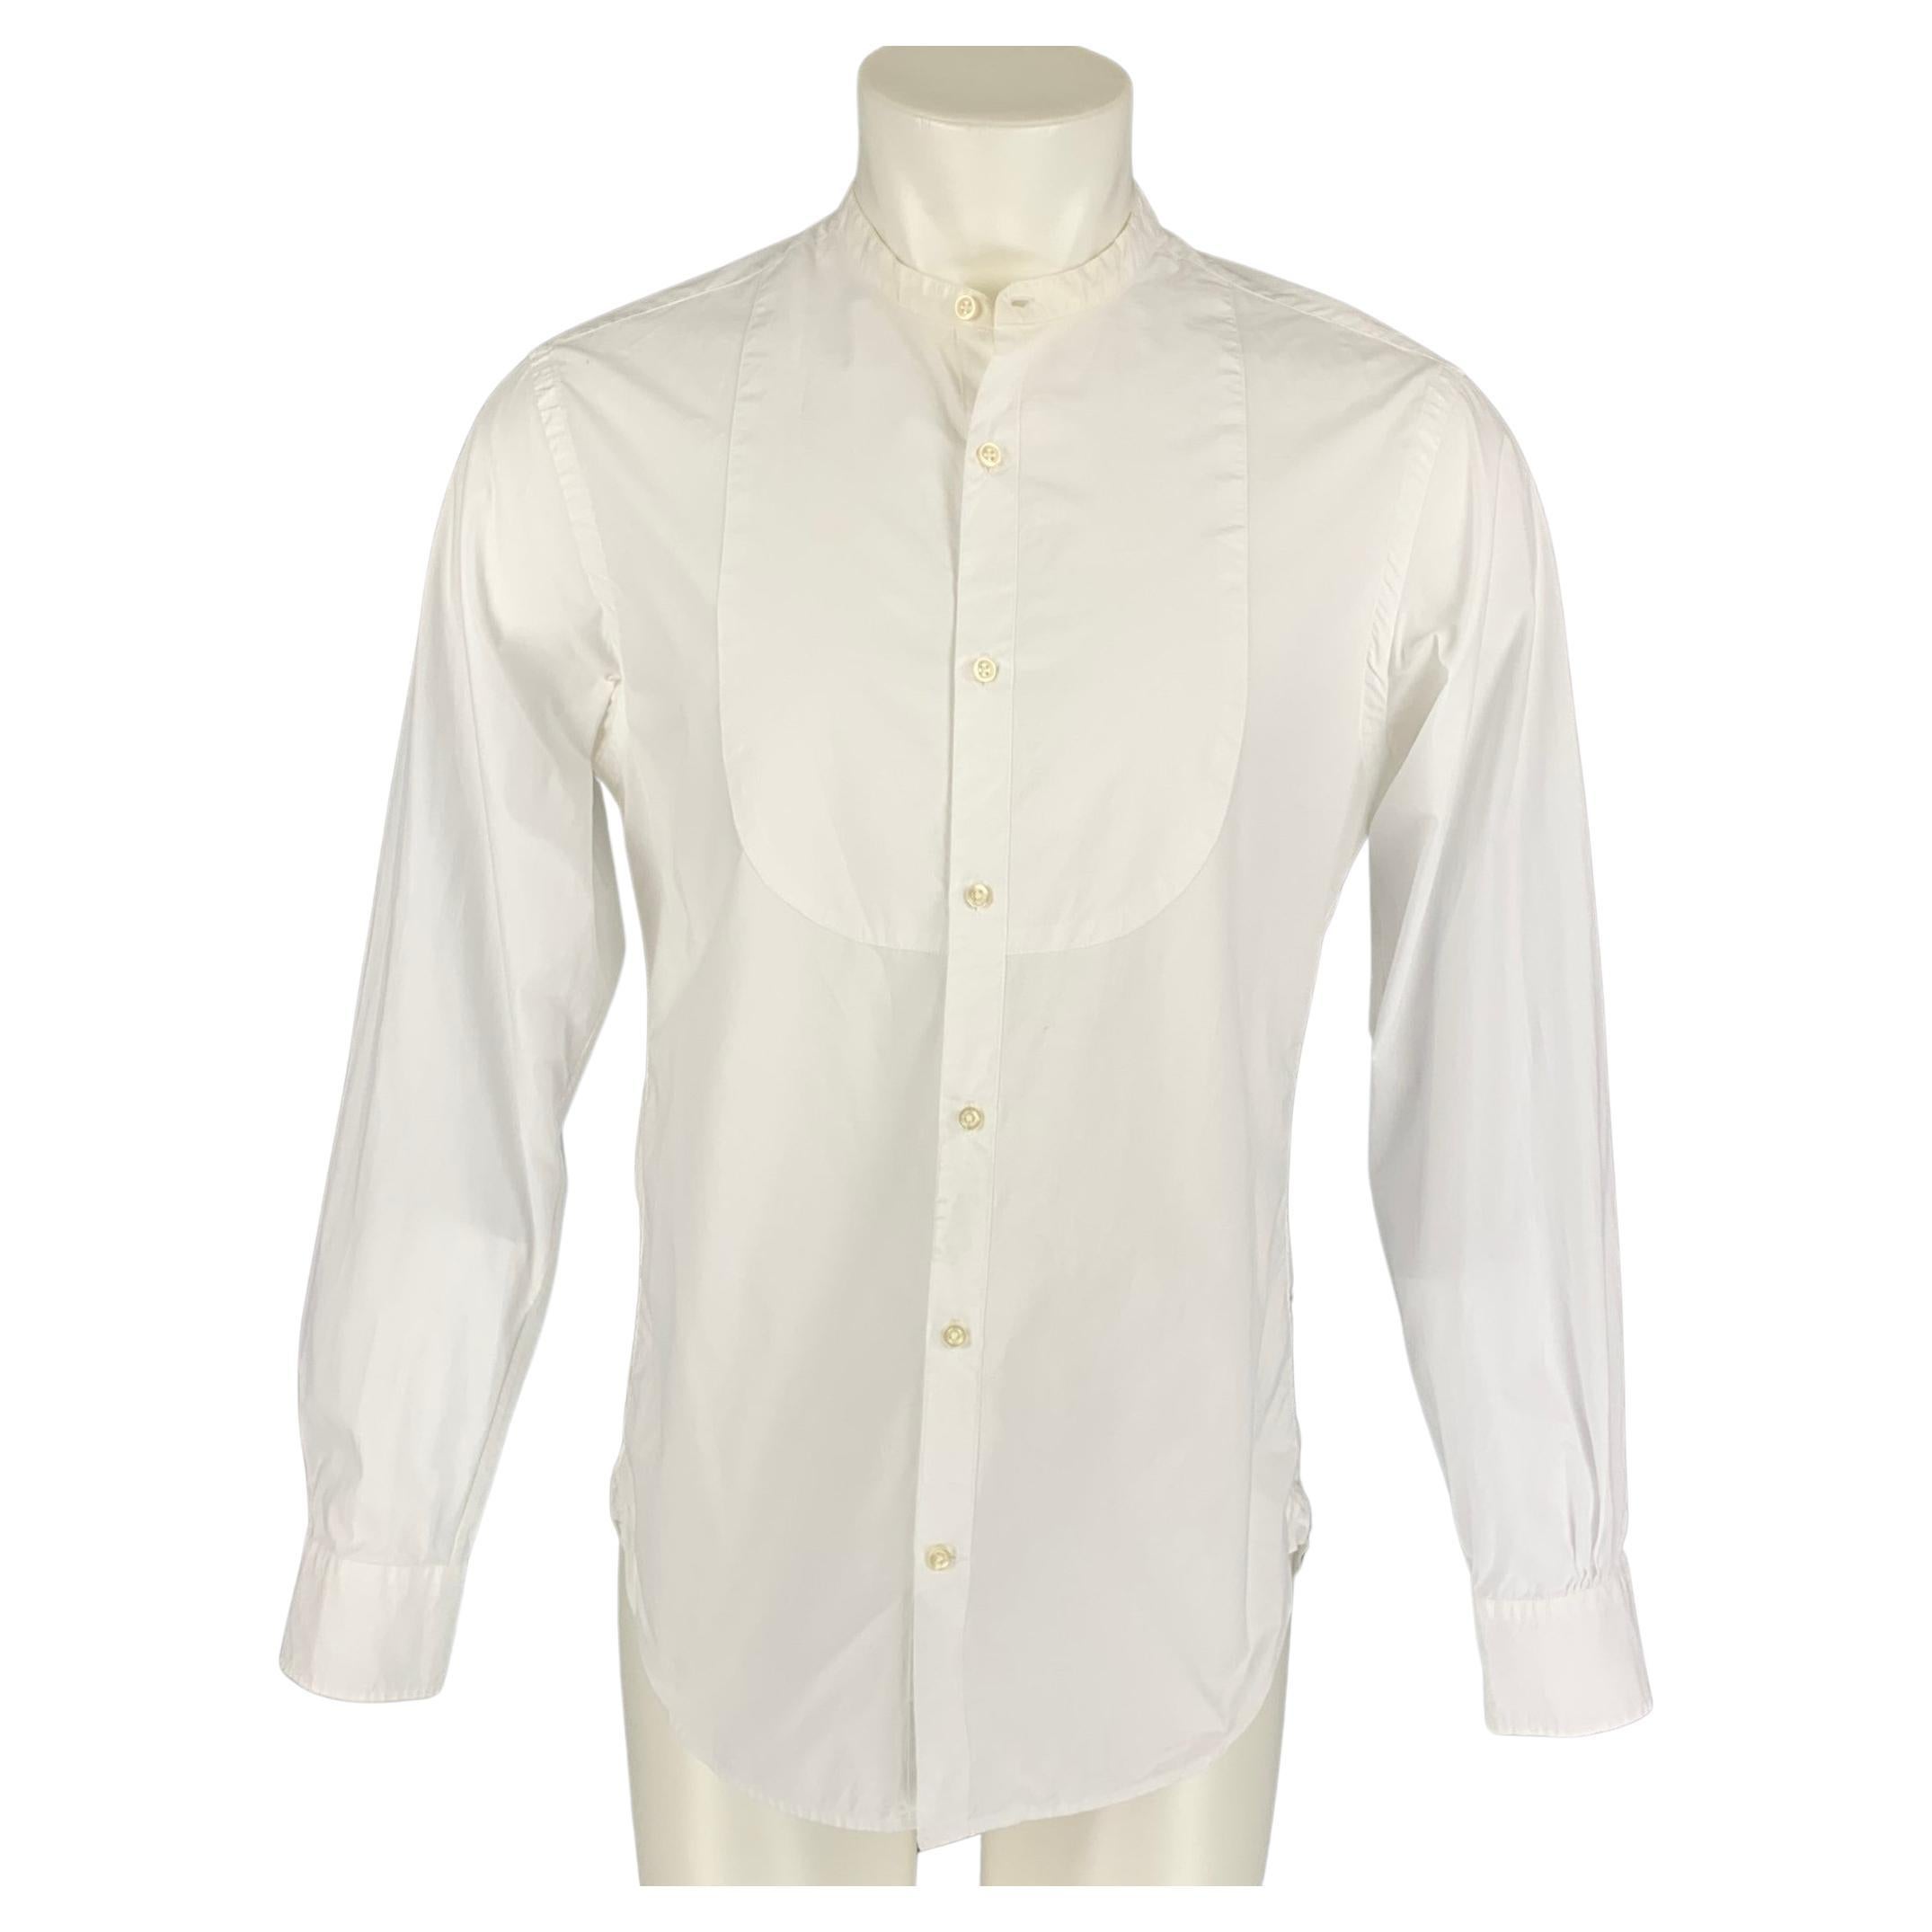 OFFICINE GENERALE x BARNEY'S NEW YORK Size M White Cotton Nehru Collar Shirt